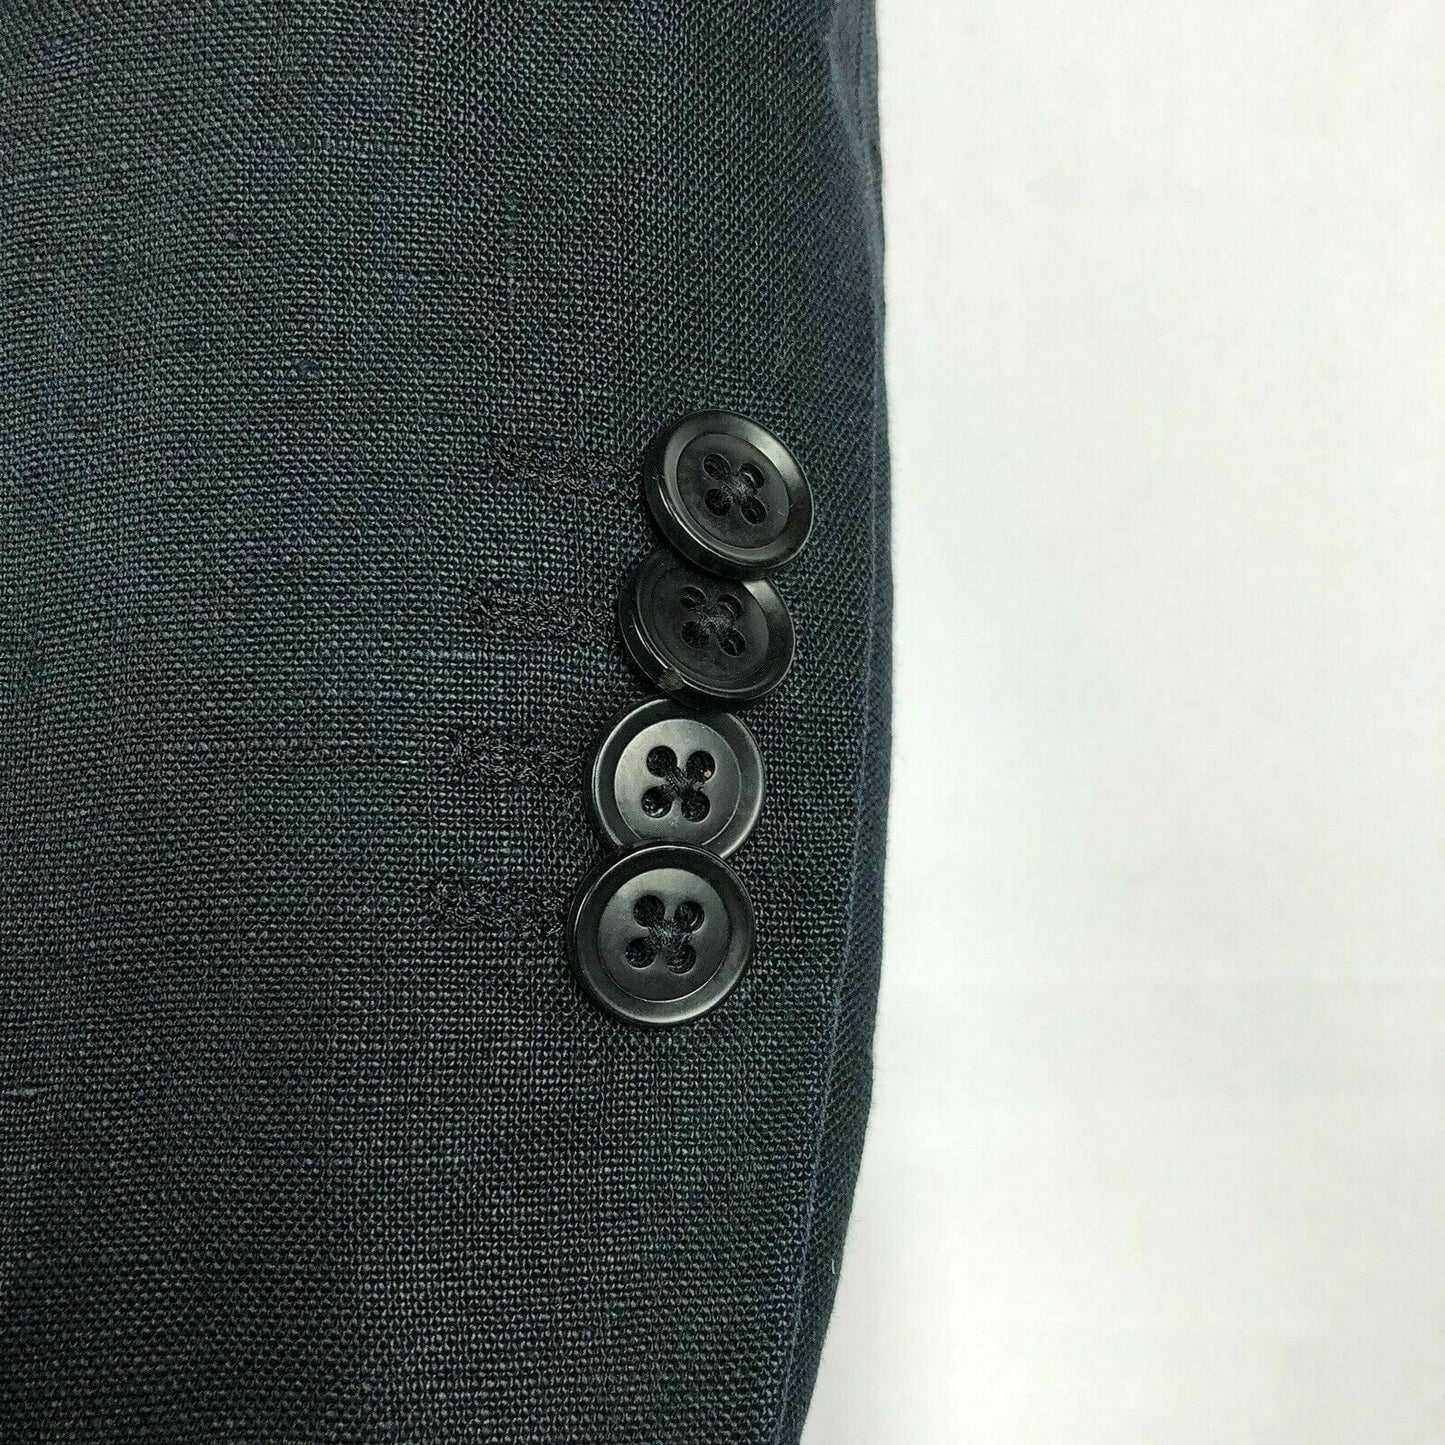 Sophisticated Celio Business Charcoal Suit Jacket XL Gray Regular Mens Coat